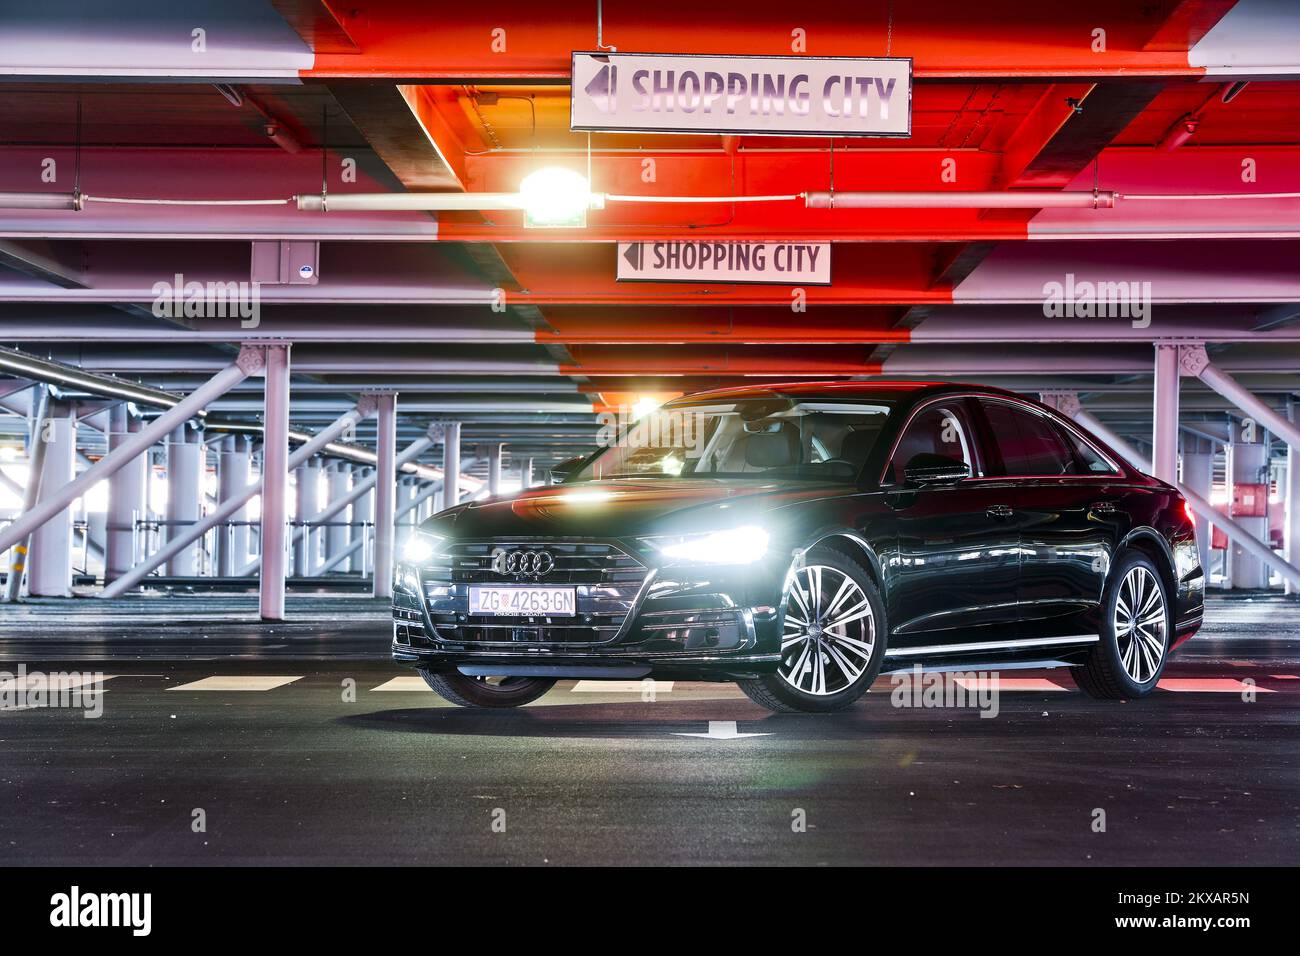 File:Audi A6 C8 Pressconference Genf 2018.jpg - Wikimedia Commons